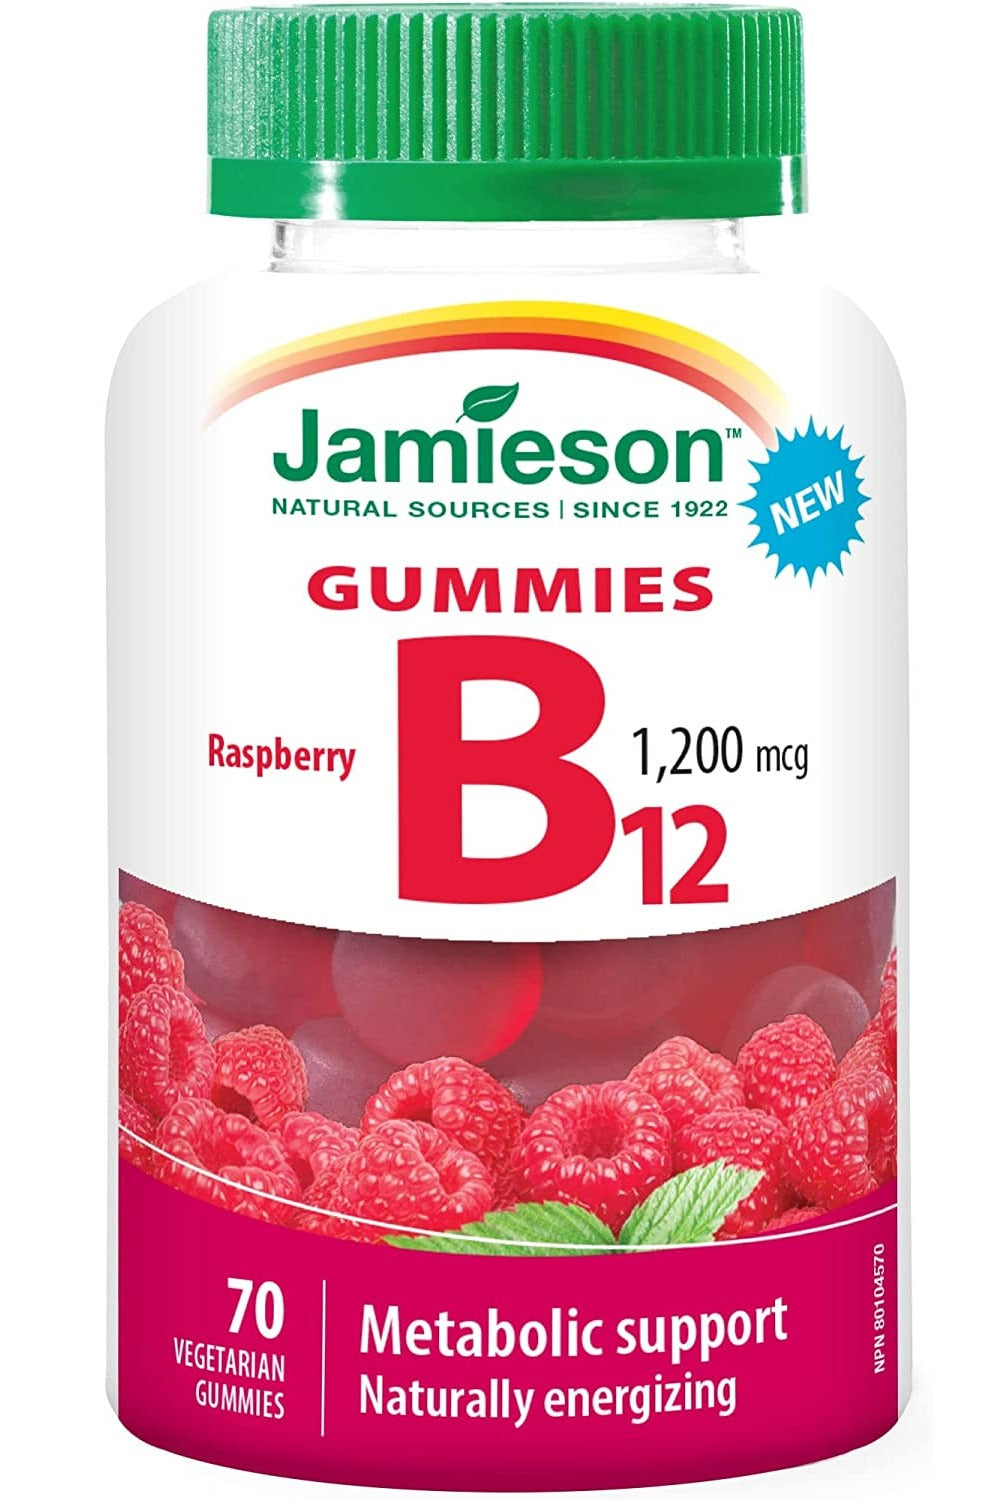 JAMIESON Vitamin B12 (Raspberry - 70 veg gummies)